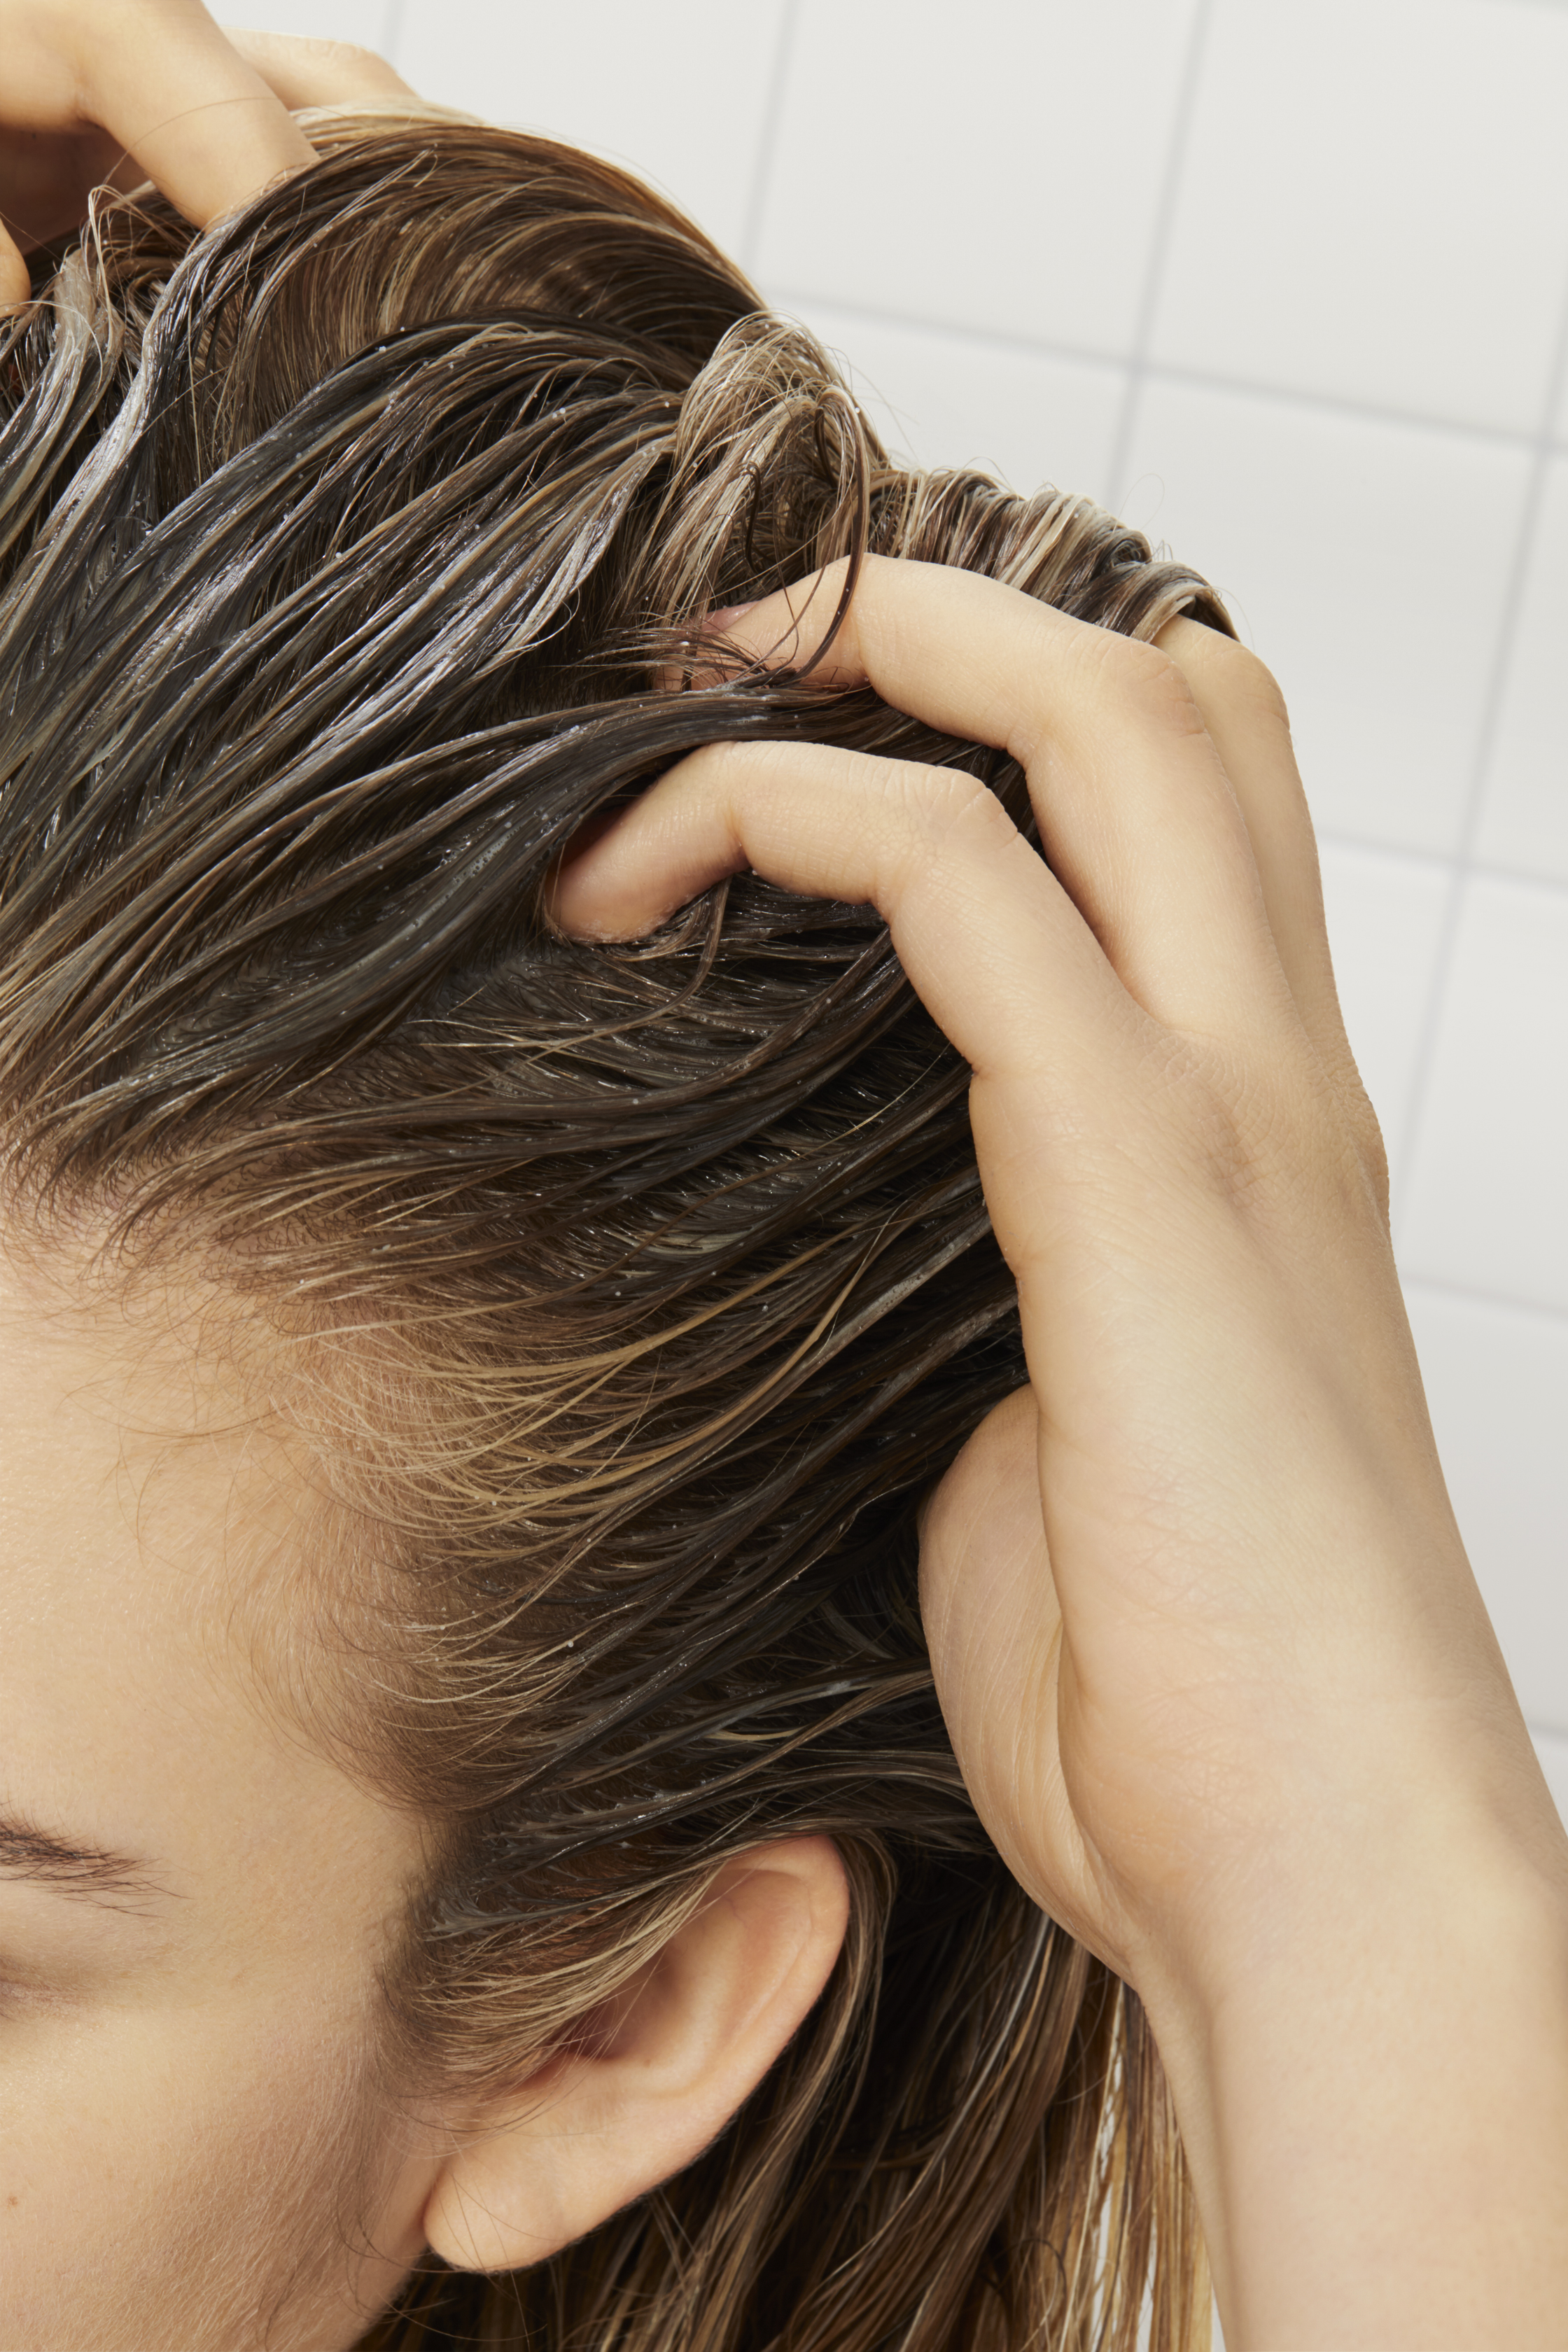 woman with dark, blonde hair giving herself a scalp massage